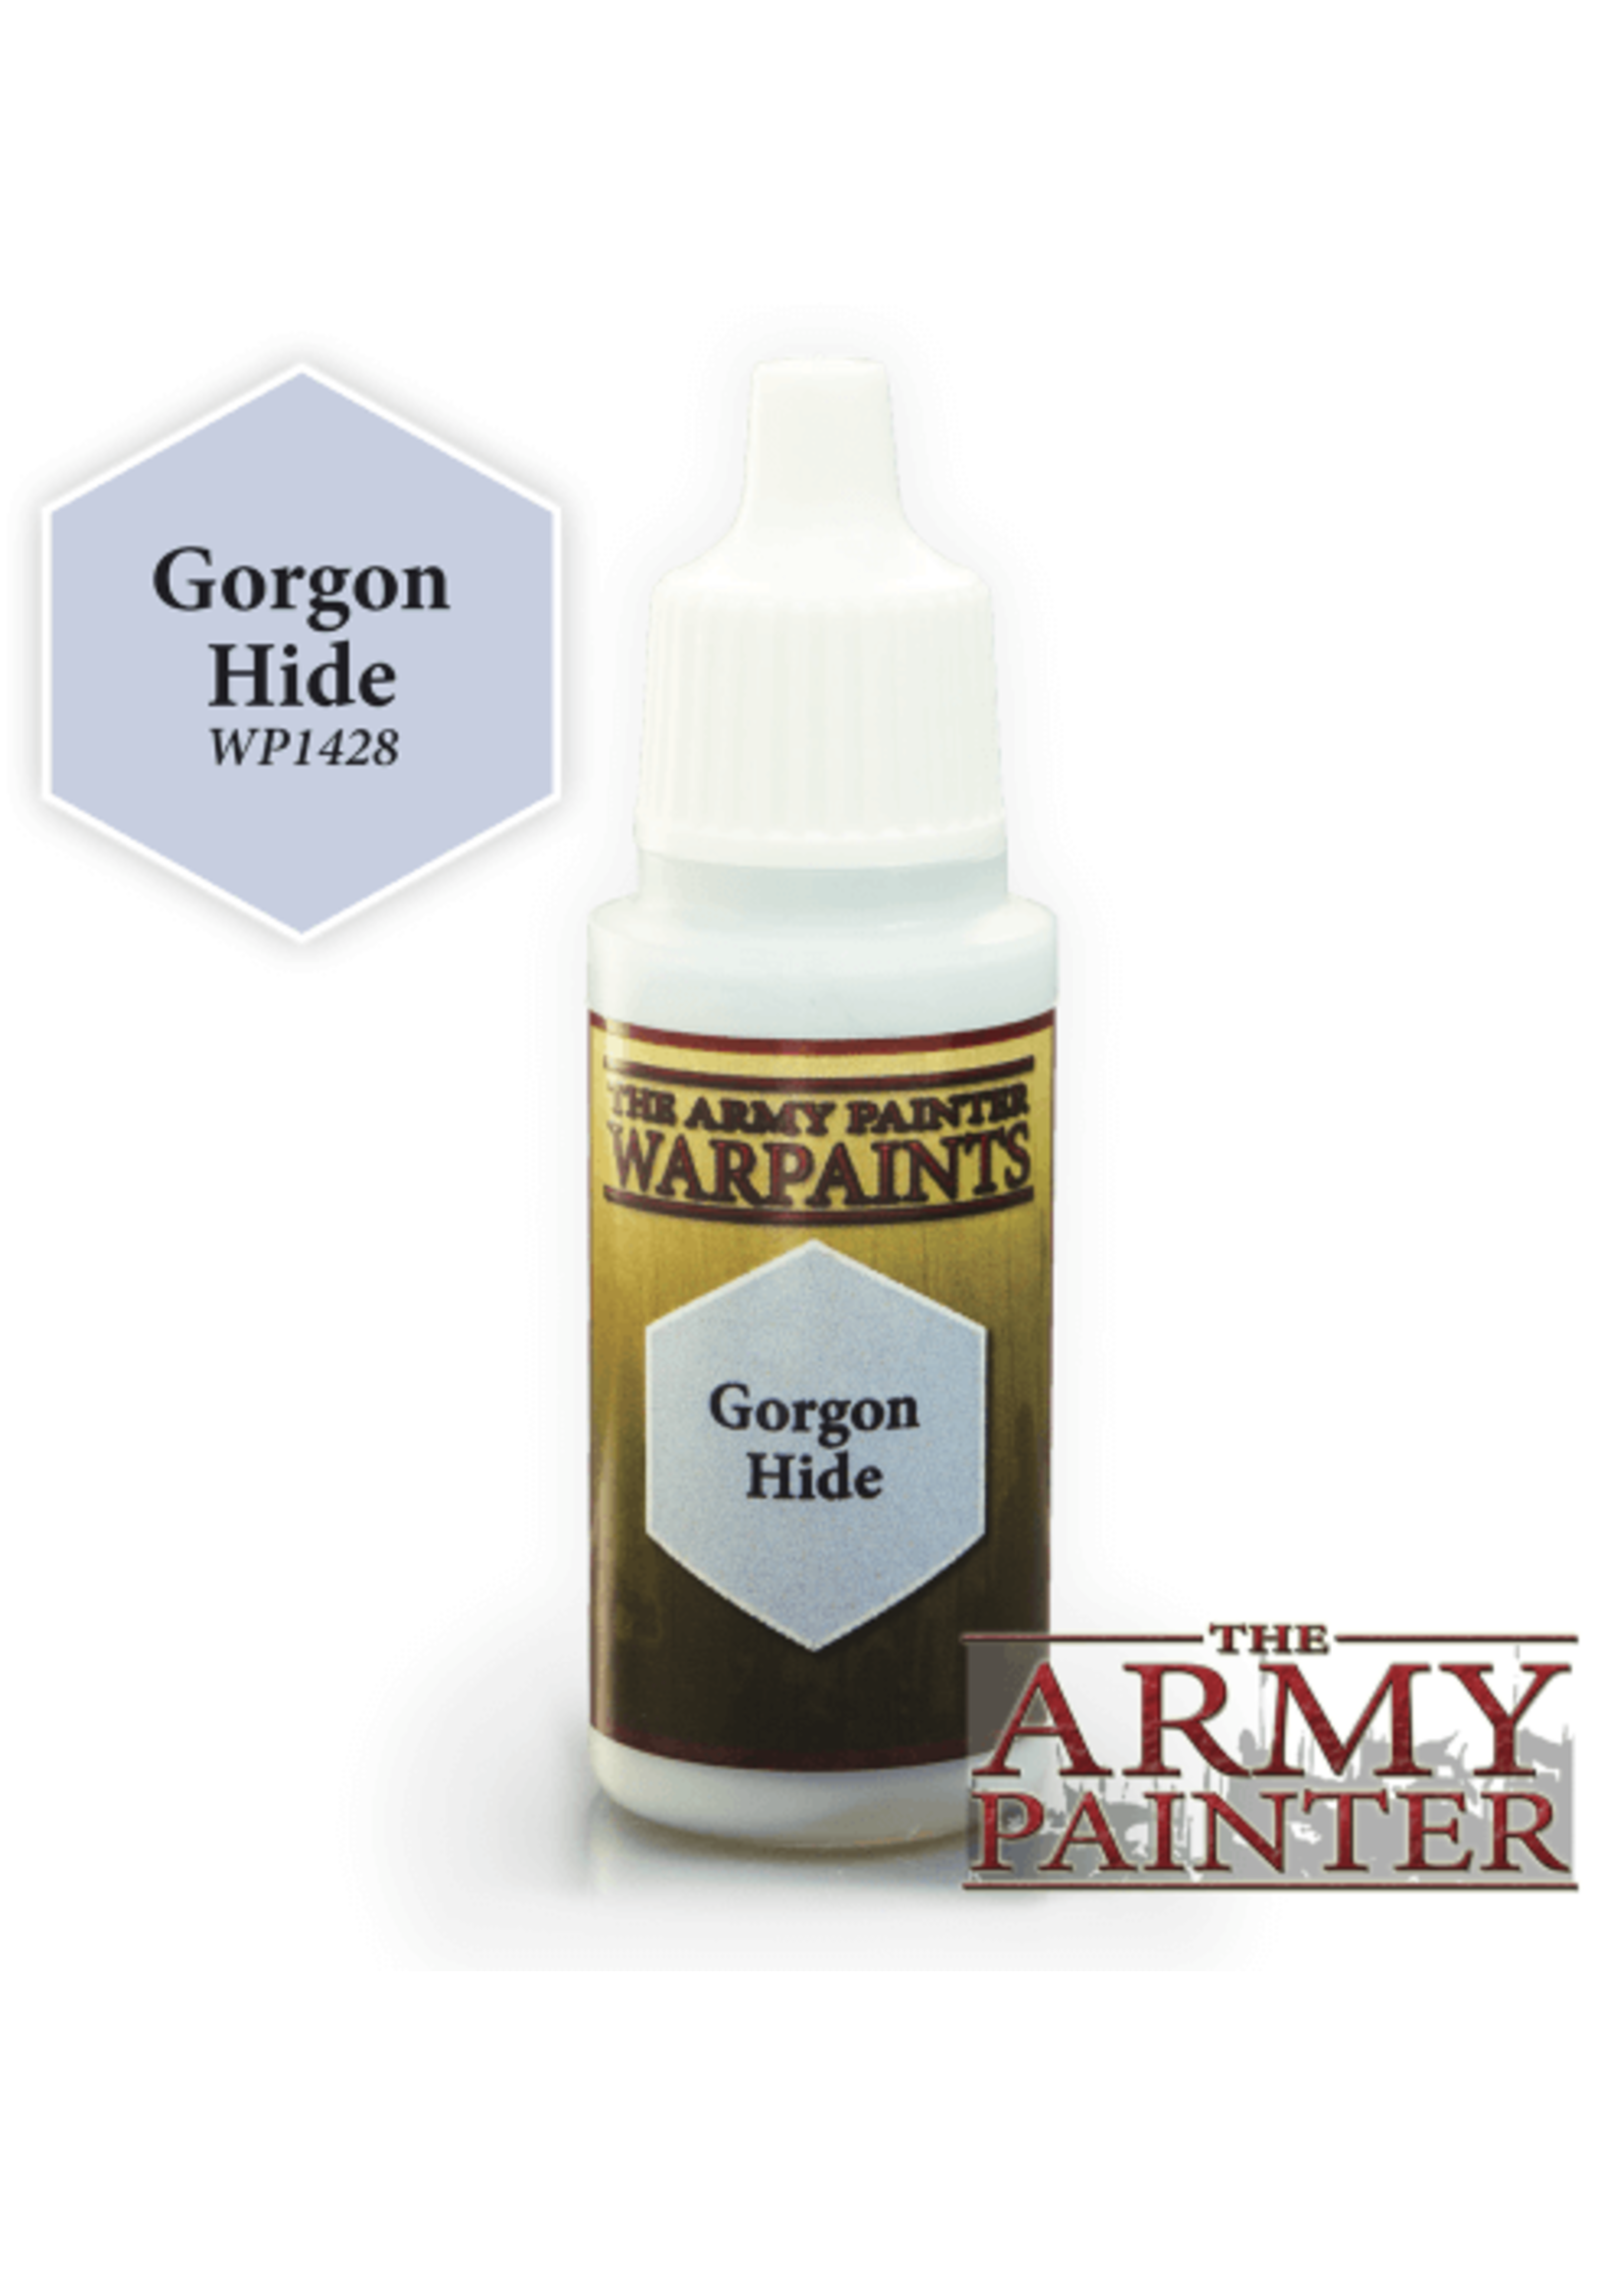 The Army Painter Acrylics Warpaints Gorgon Hide